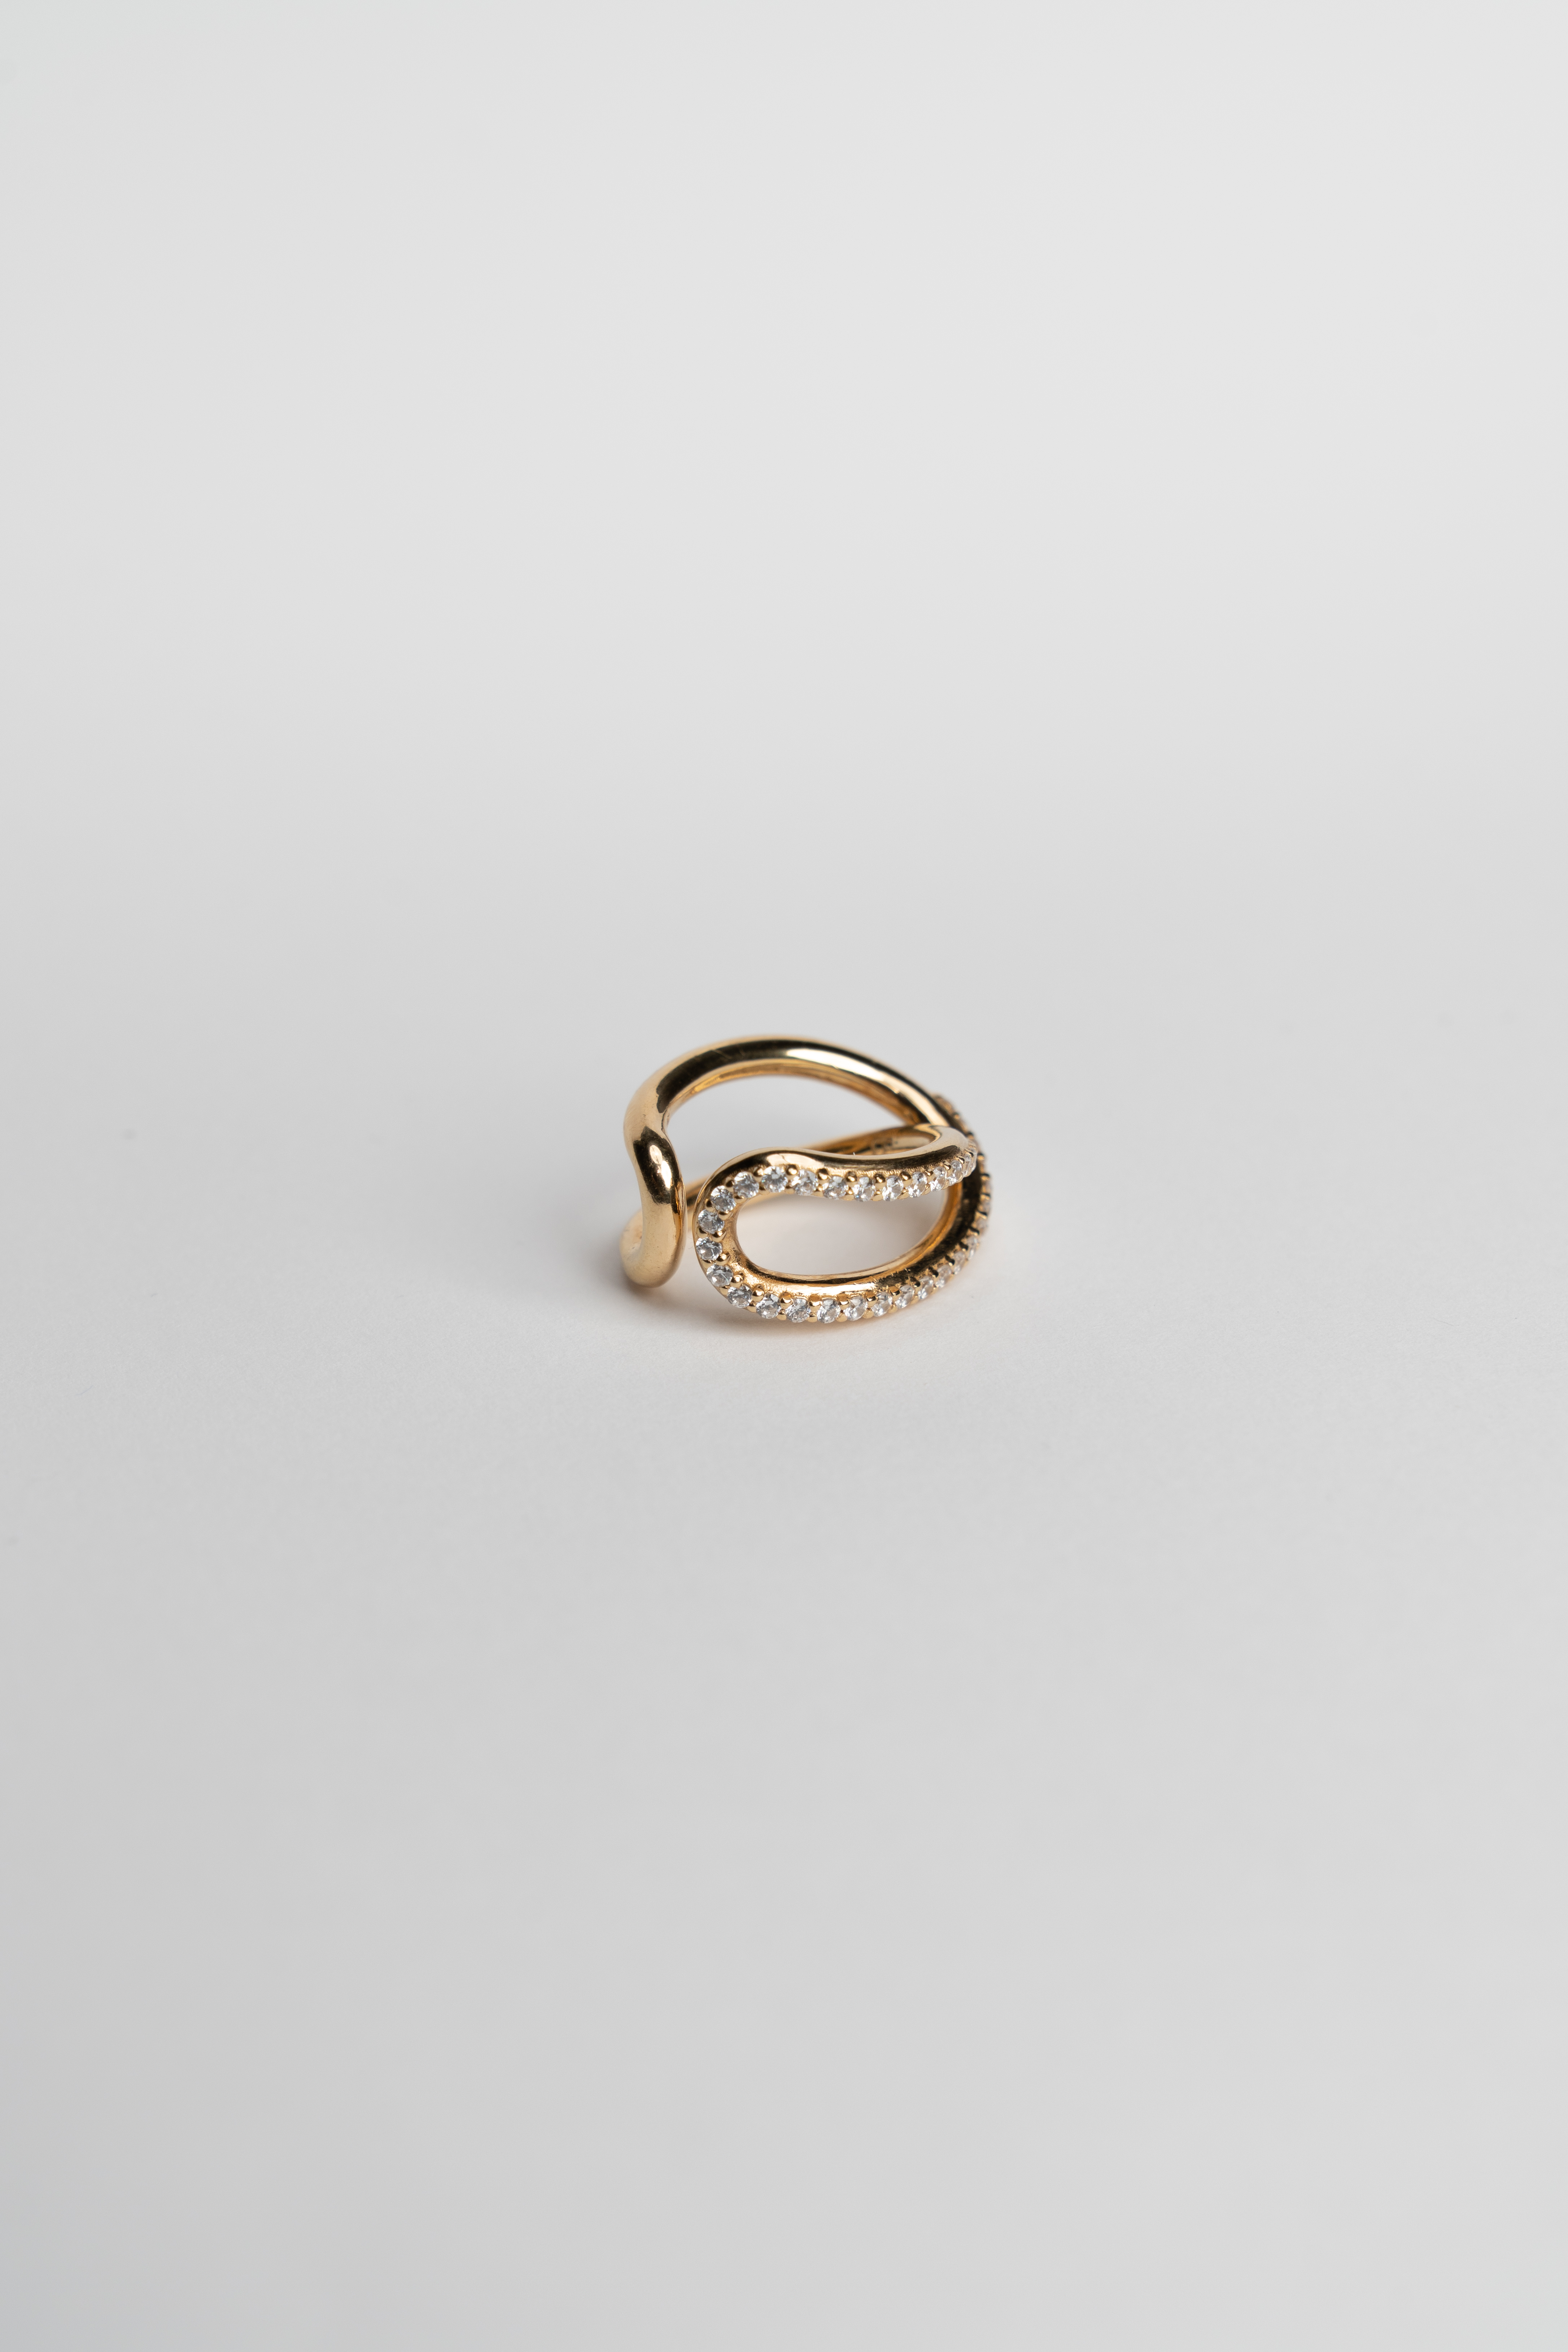 18k yellow gold ring with 0,8ct diamonds VS1-0